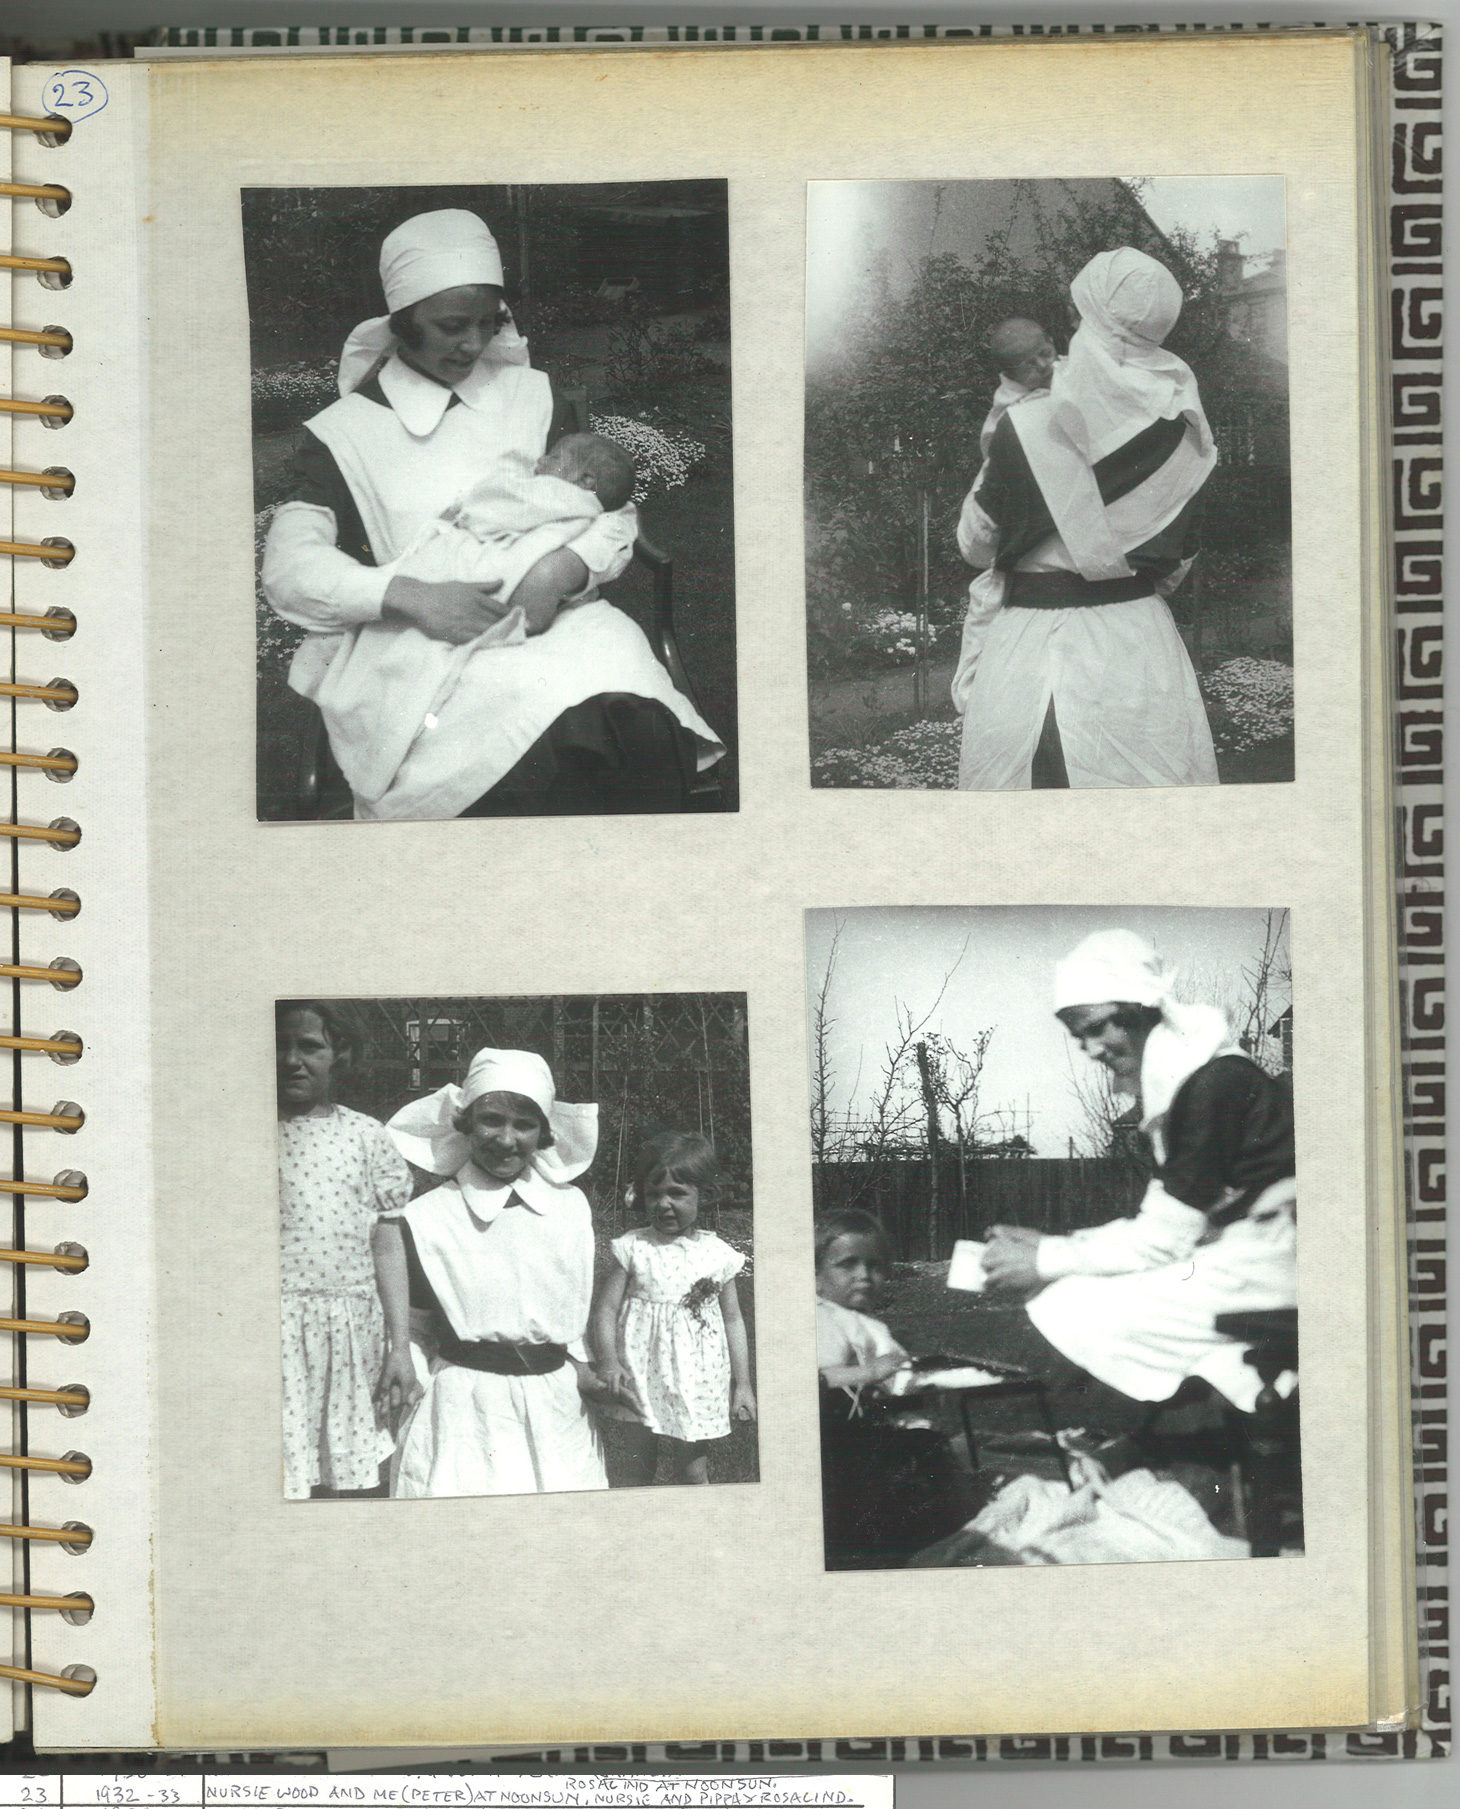 P23: Nurse Wood and Peter Bearman at home, Rosalind, Nursie and Pippa